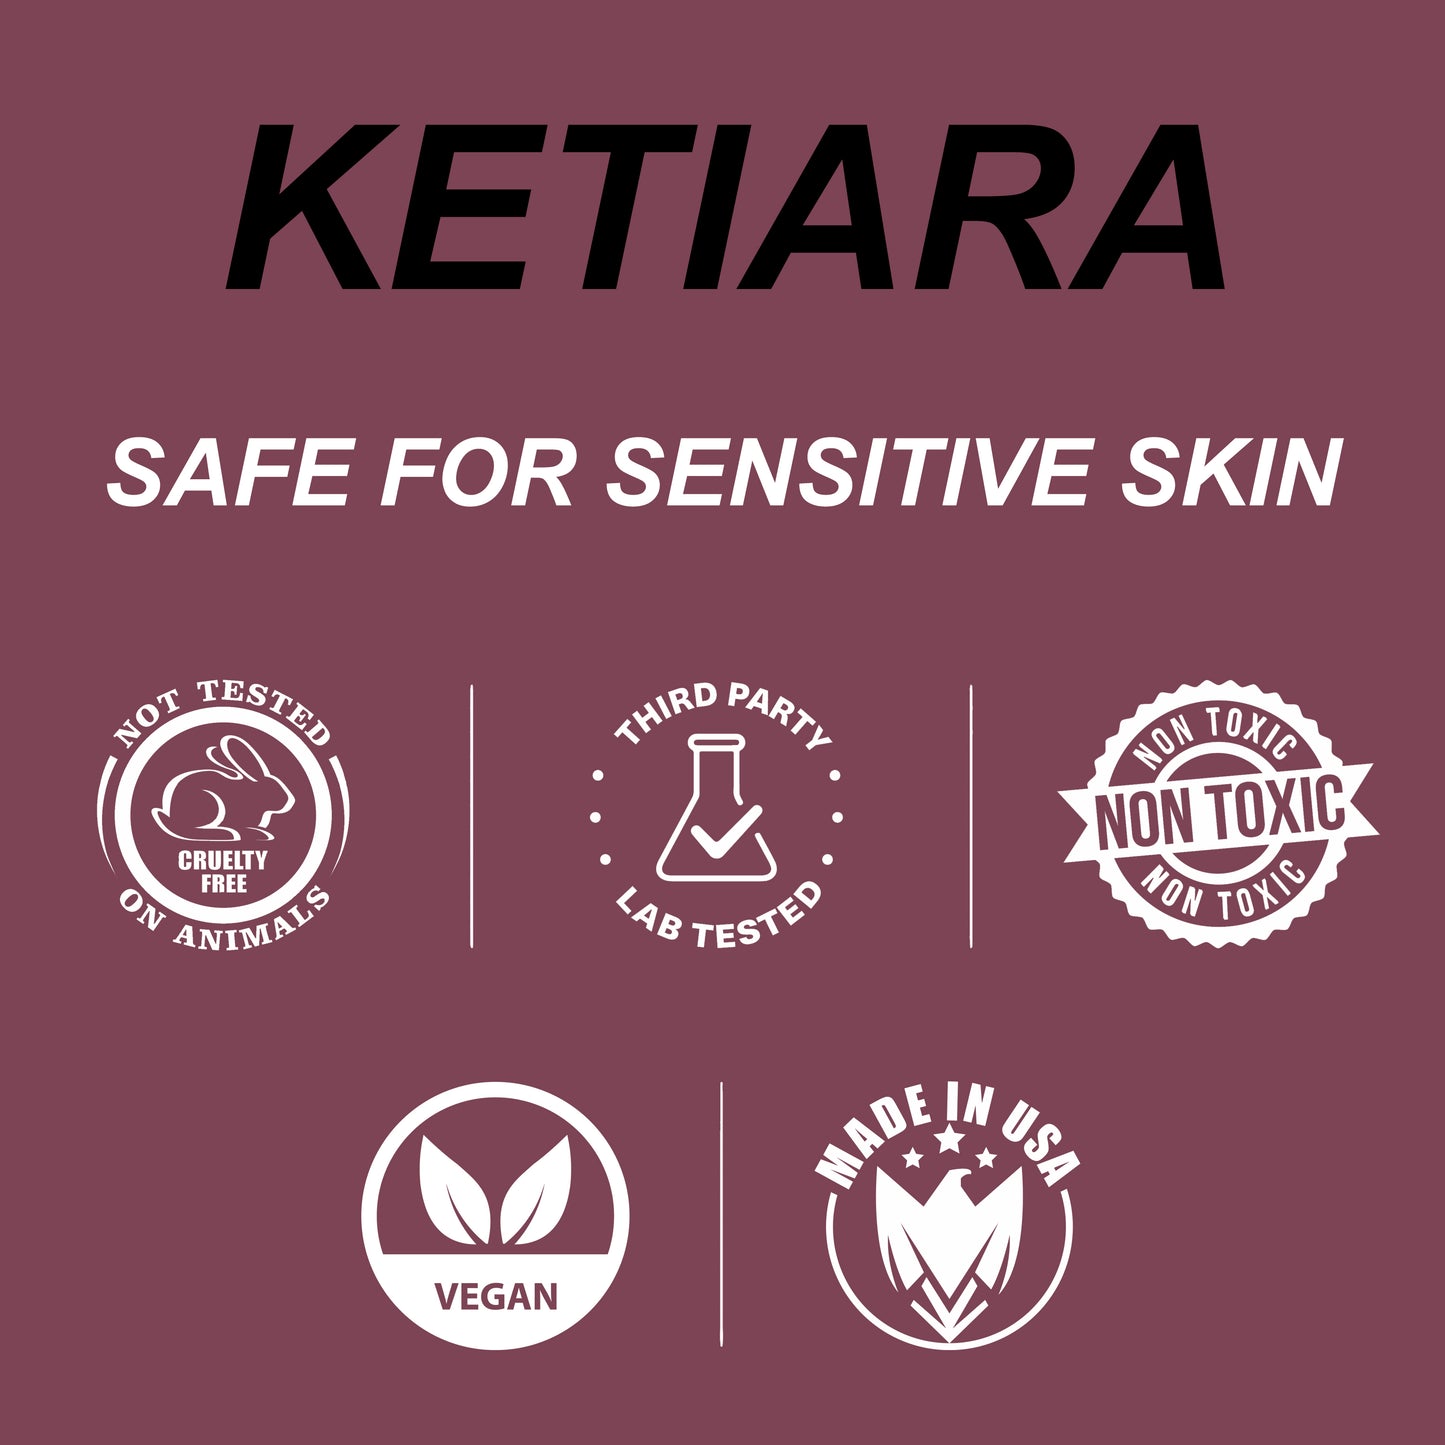 Ketiara Premium Full Coverage Amethyst Liquid Lipstick Infused With Hyaluronic Acid, 10 ml